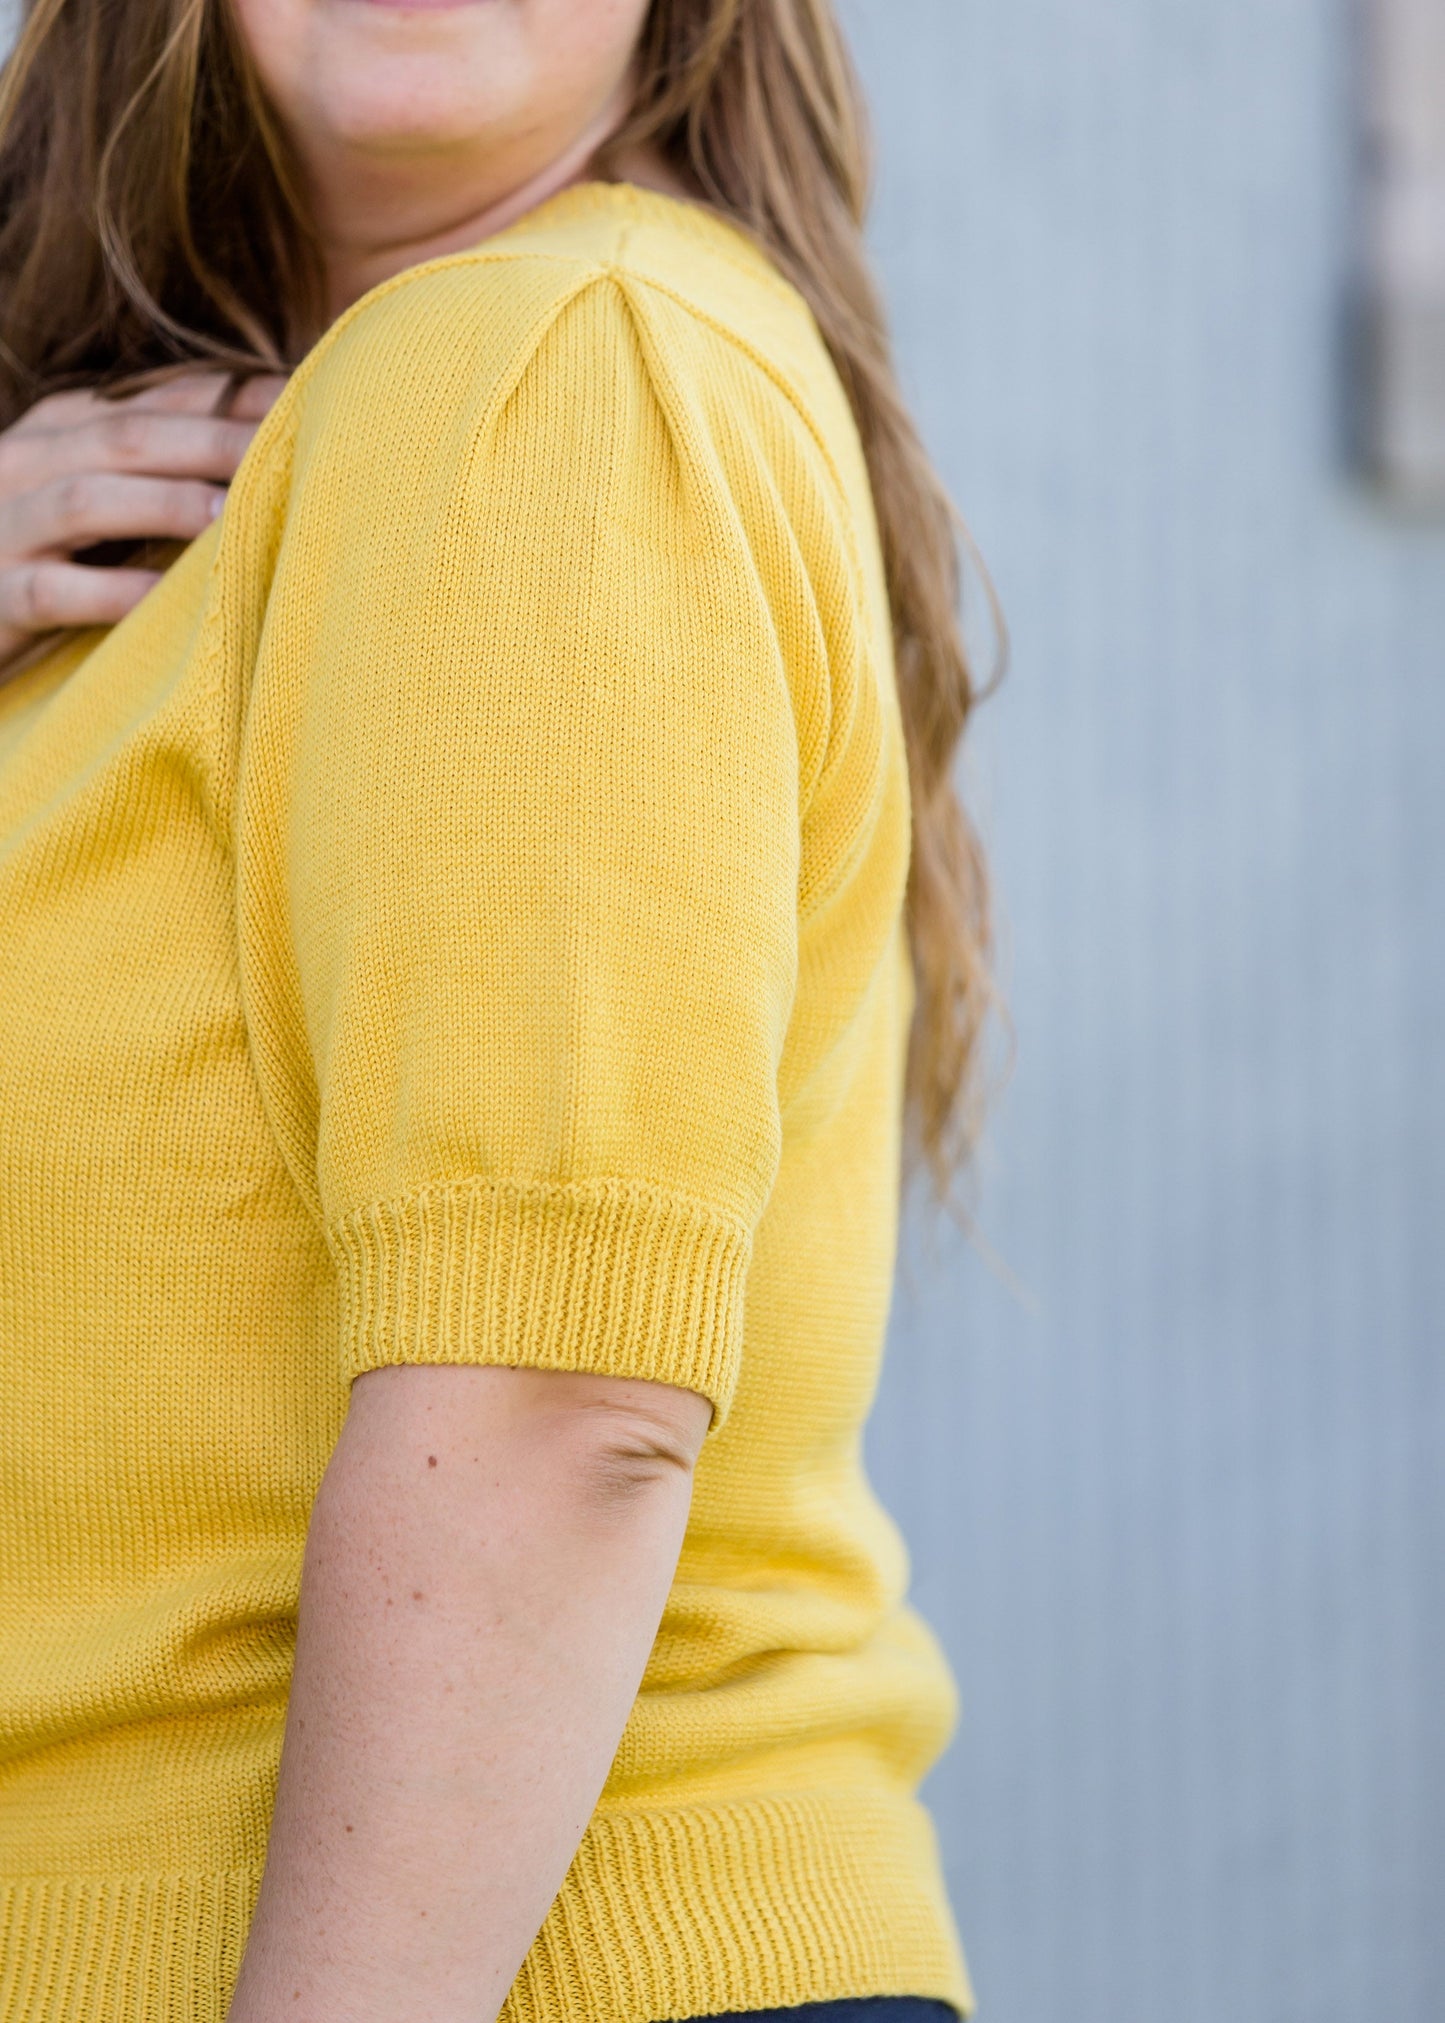 Crewneck Mustard Sweater Top - FINAL SALE Tops